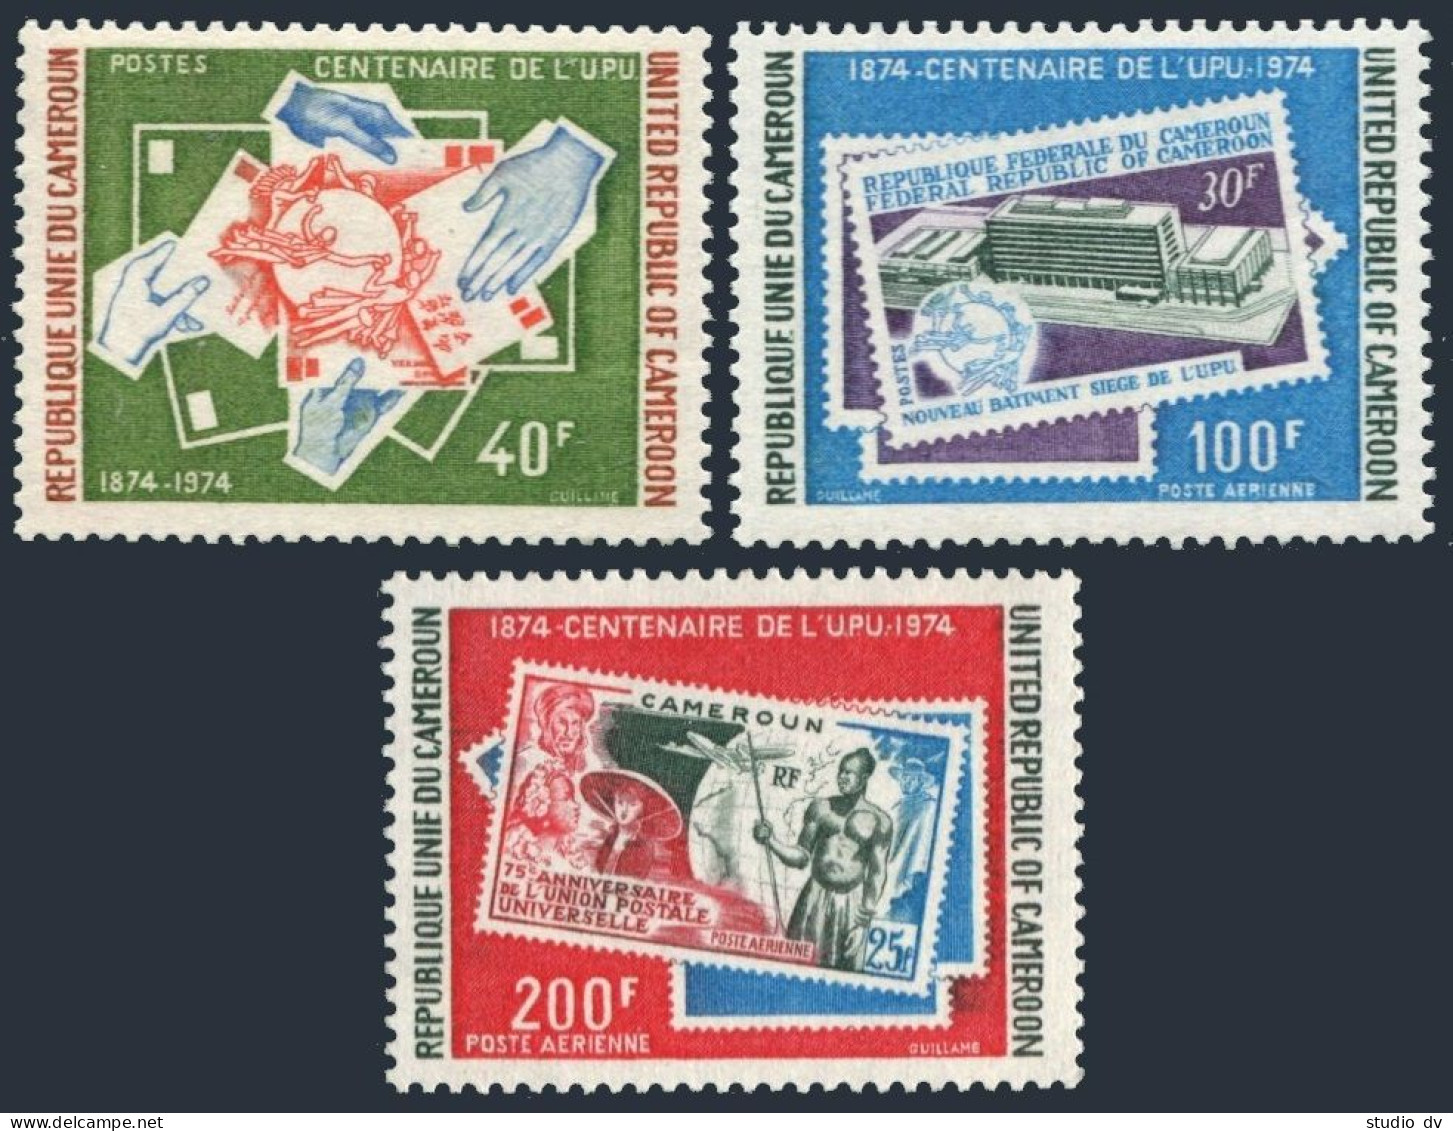 Cameroun 594, C218-C219, MNH. Michel 780-782. UPU-100, 1974. Stamp On Stamp. - Cameroun (1960-...)